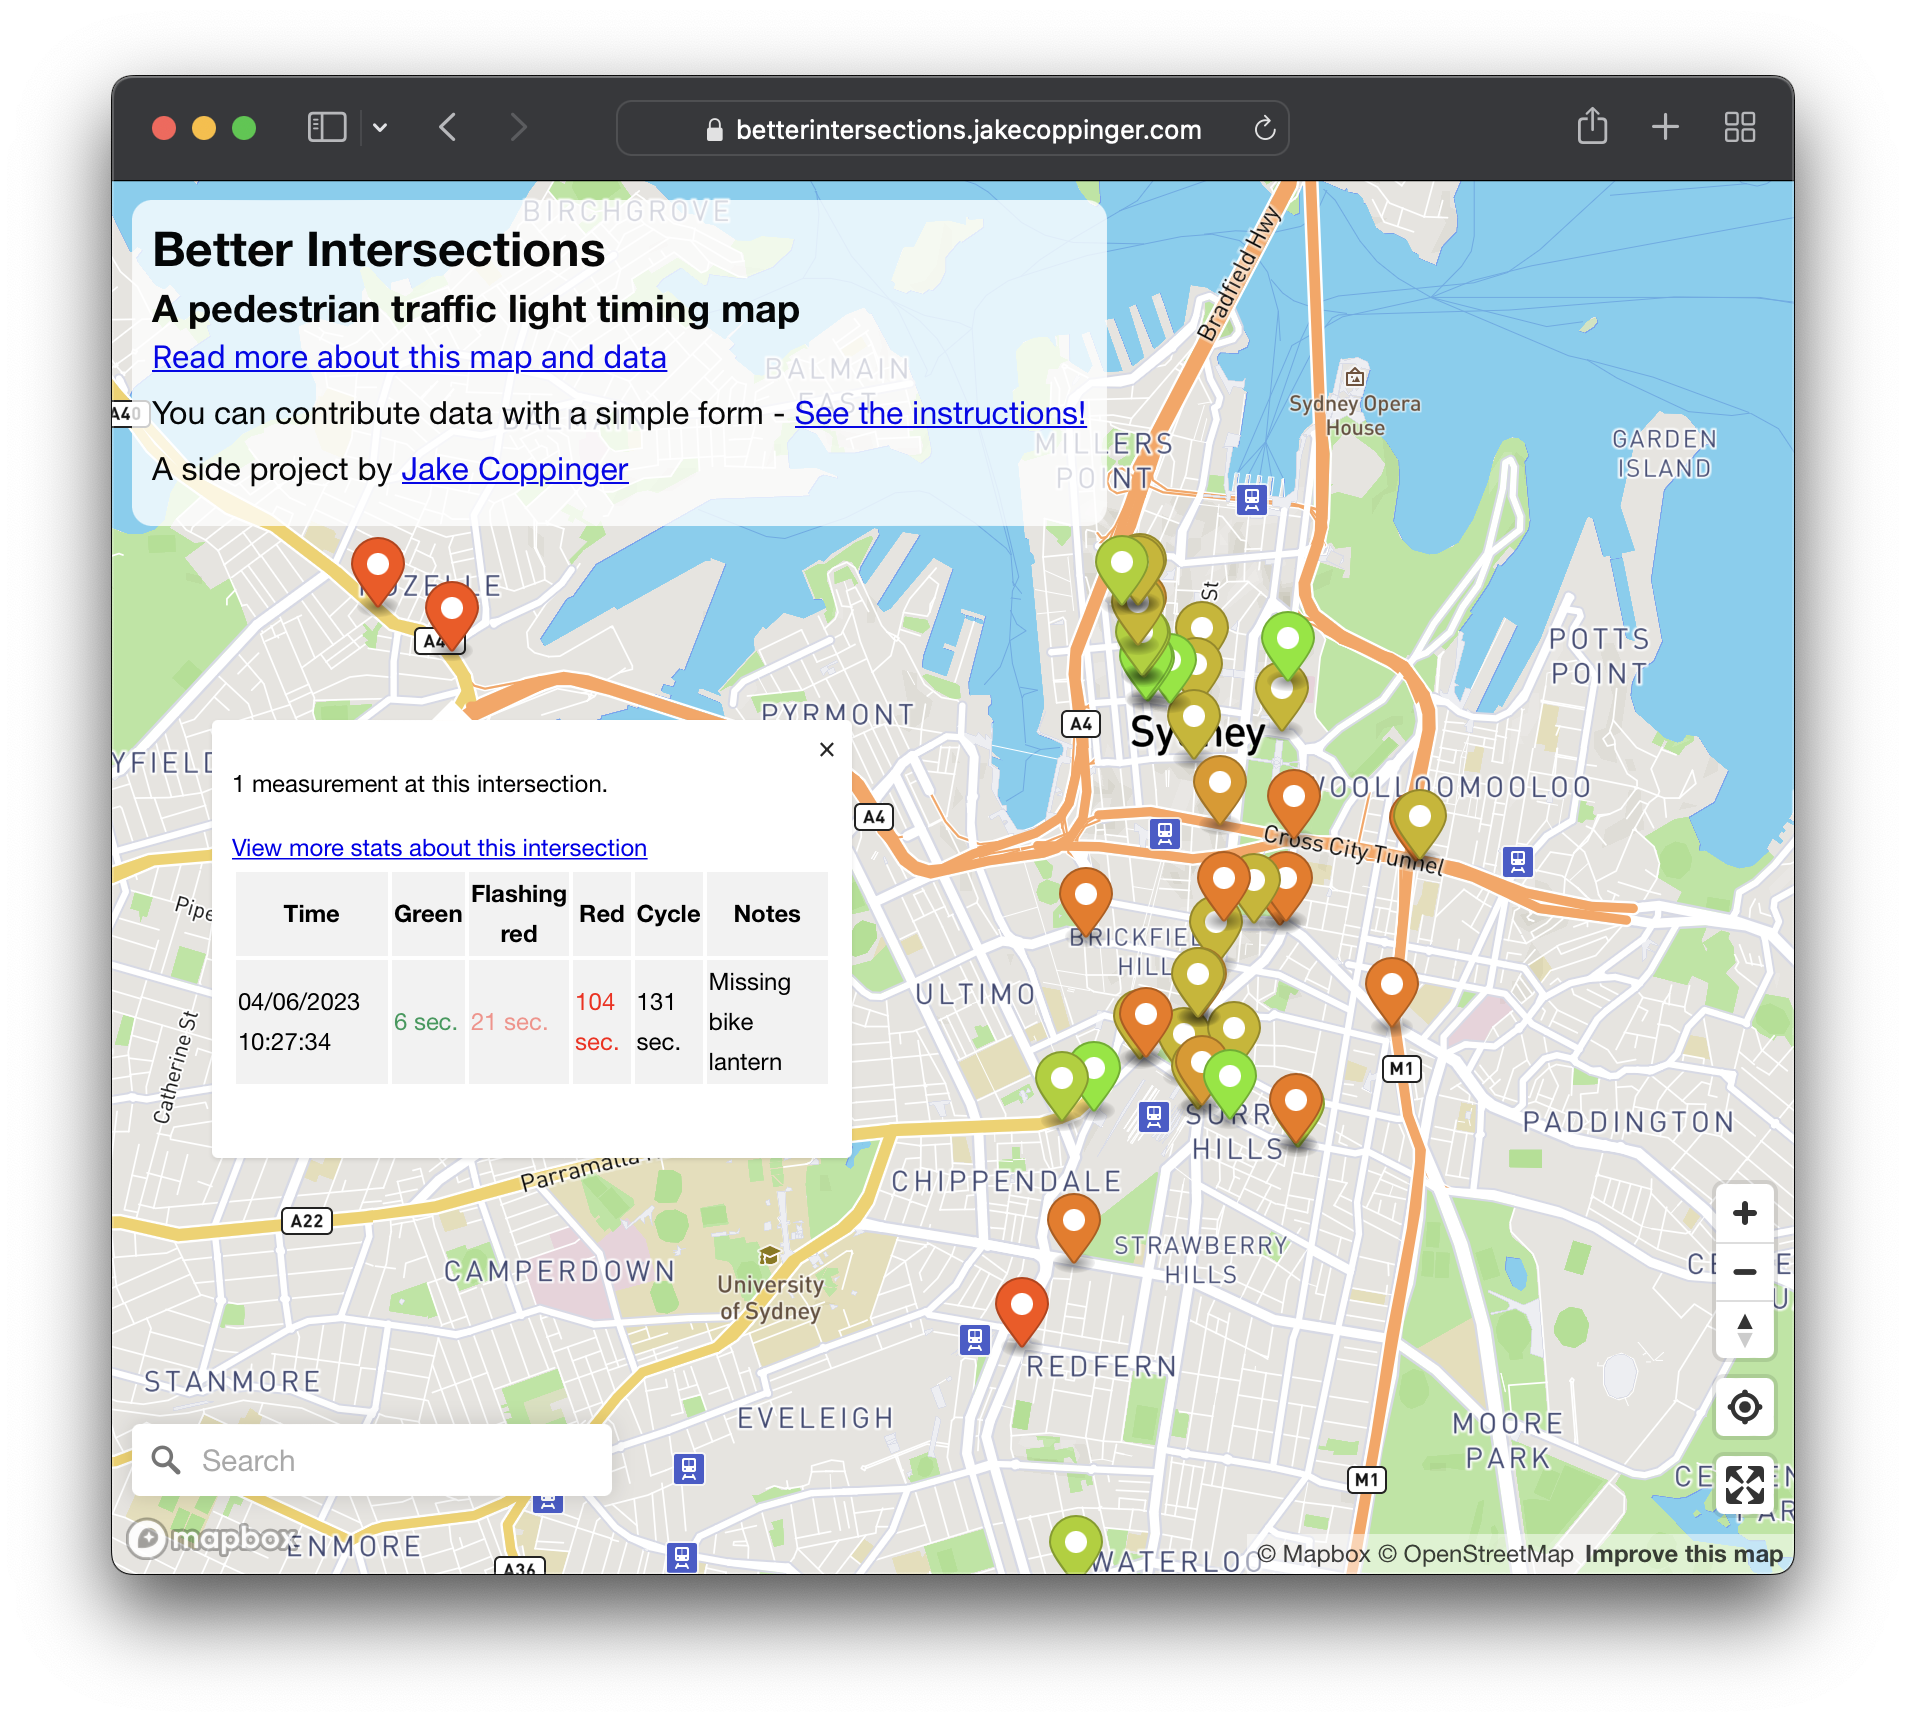 Mapping pedestrian traffic light timing in Sydney, Australia